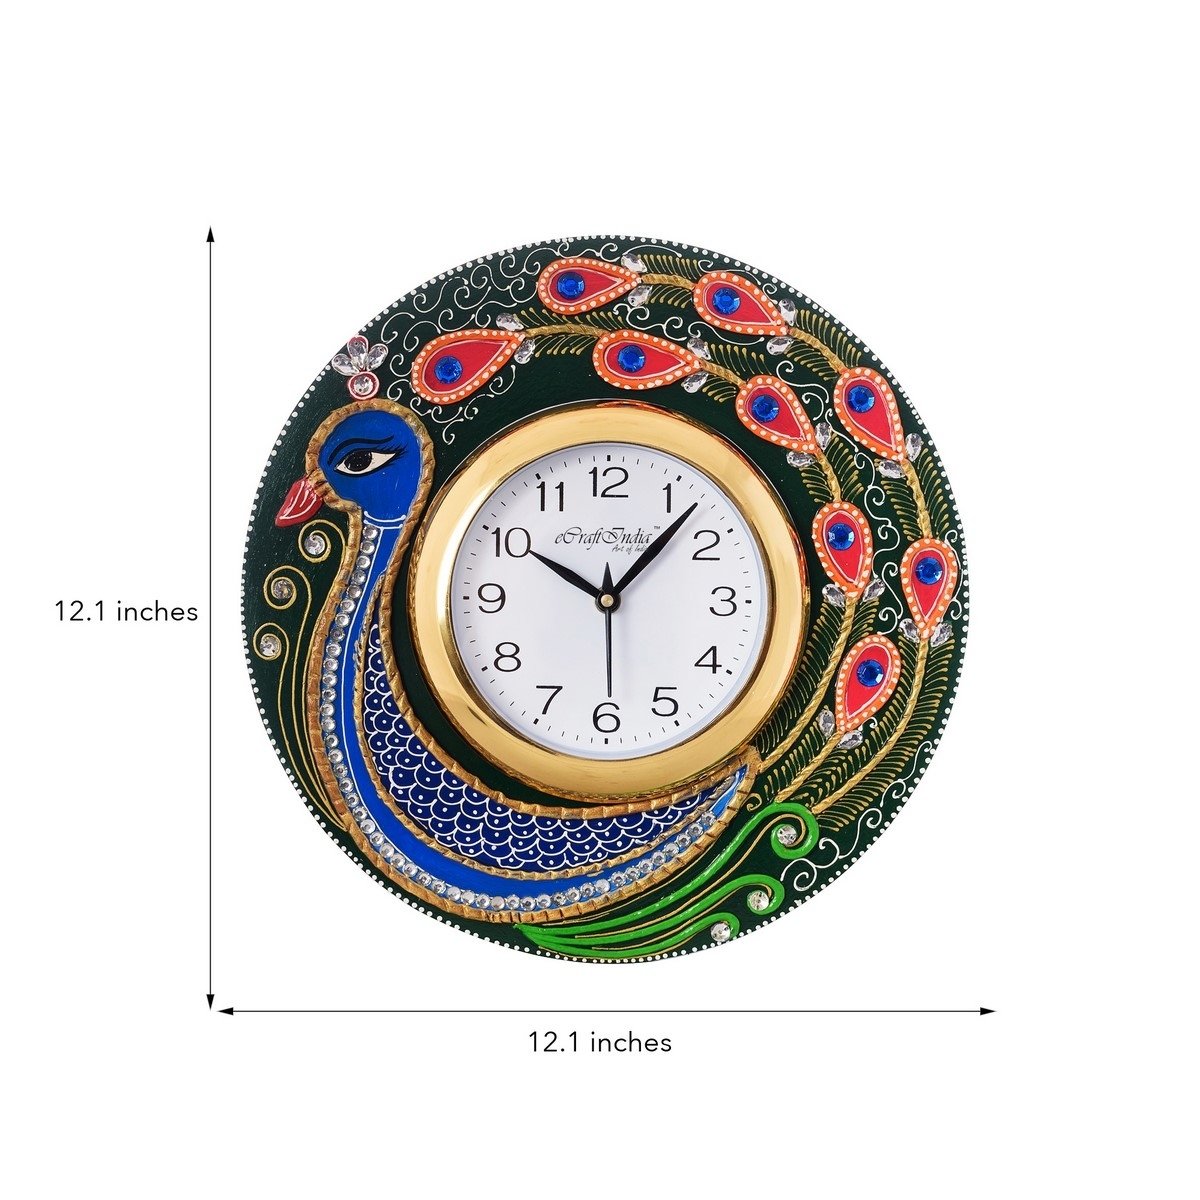 Peacock Design Handicrafted Decorative Papier-Mache Wooden Wall Clock 2